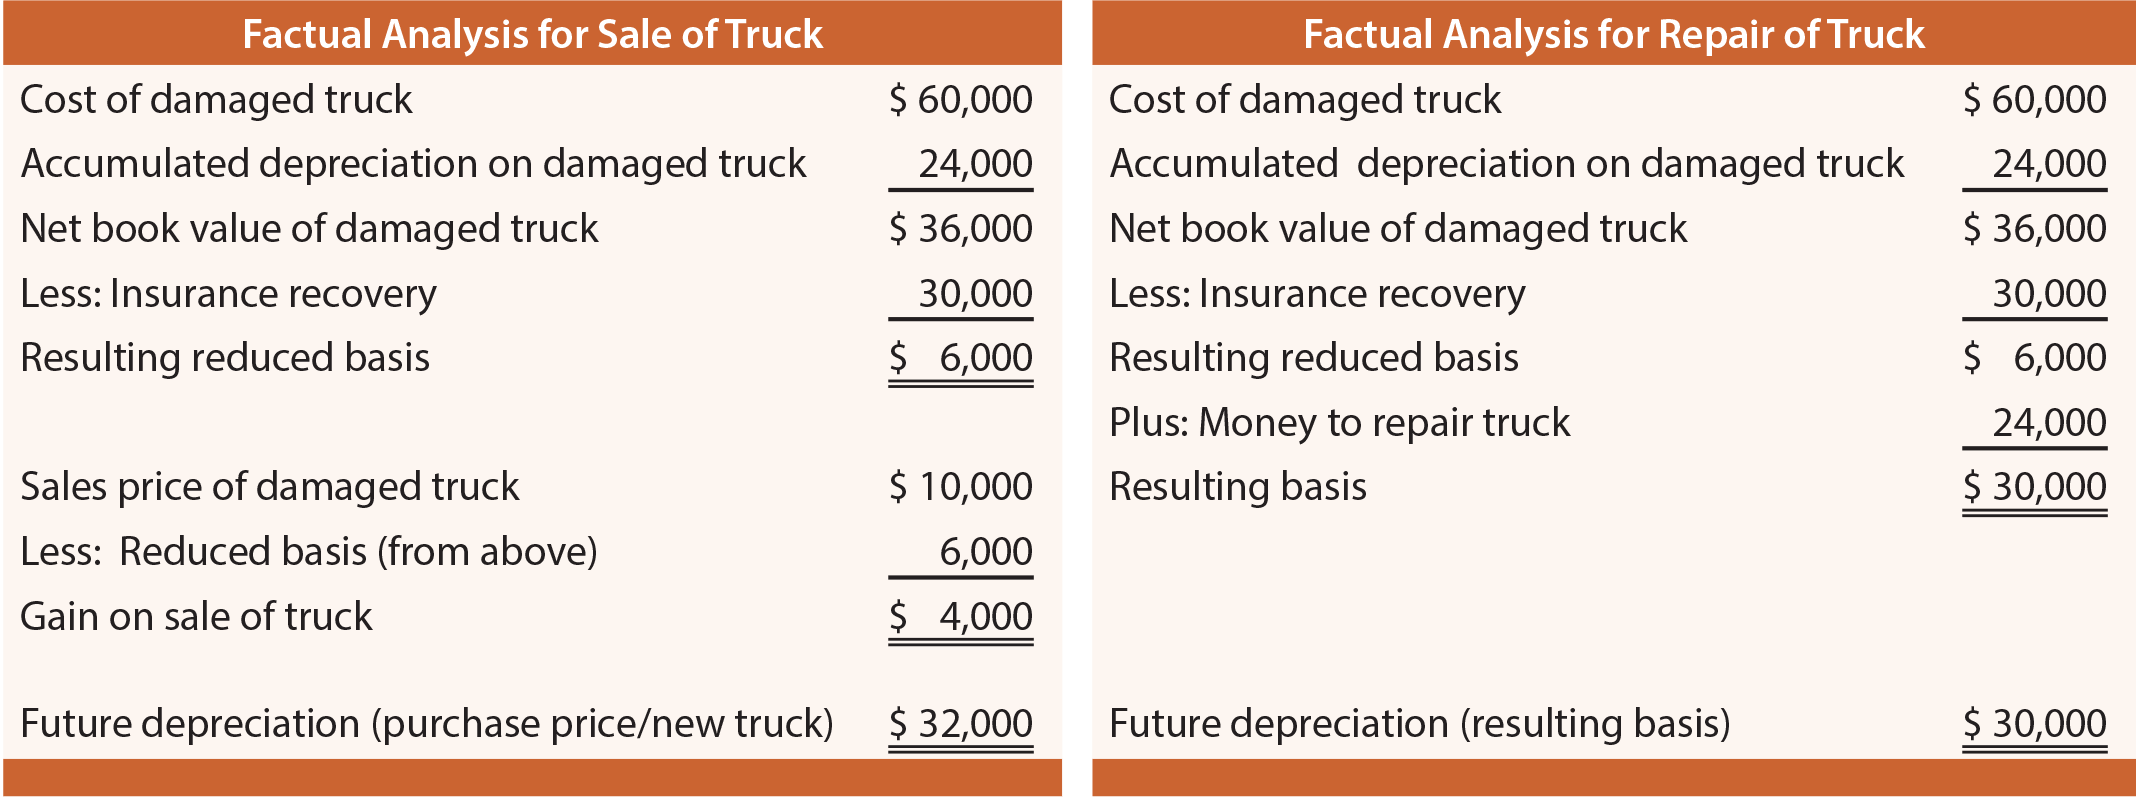 Factual Analysis of Truck